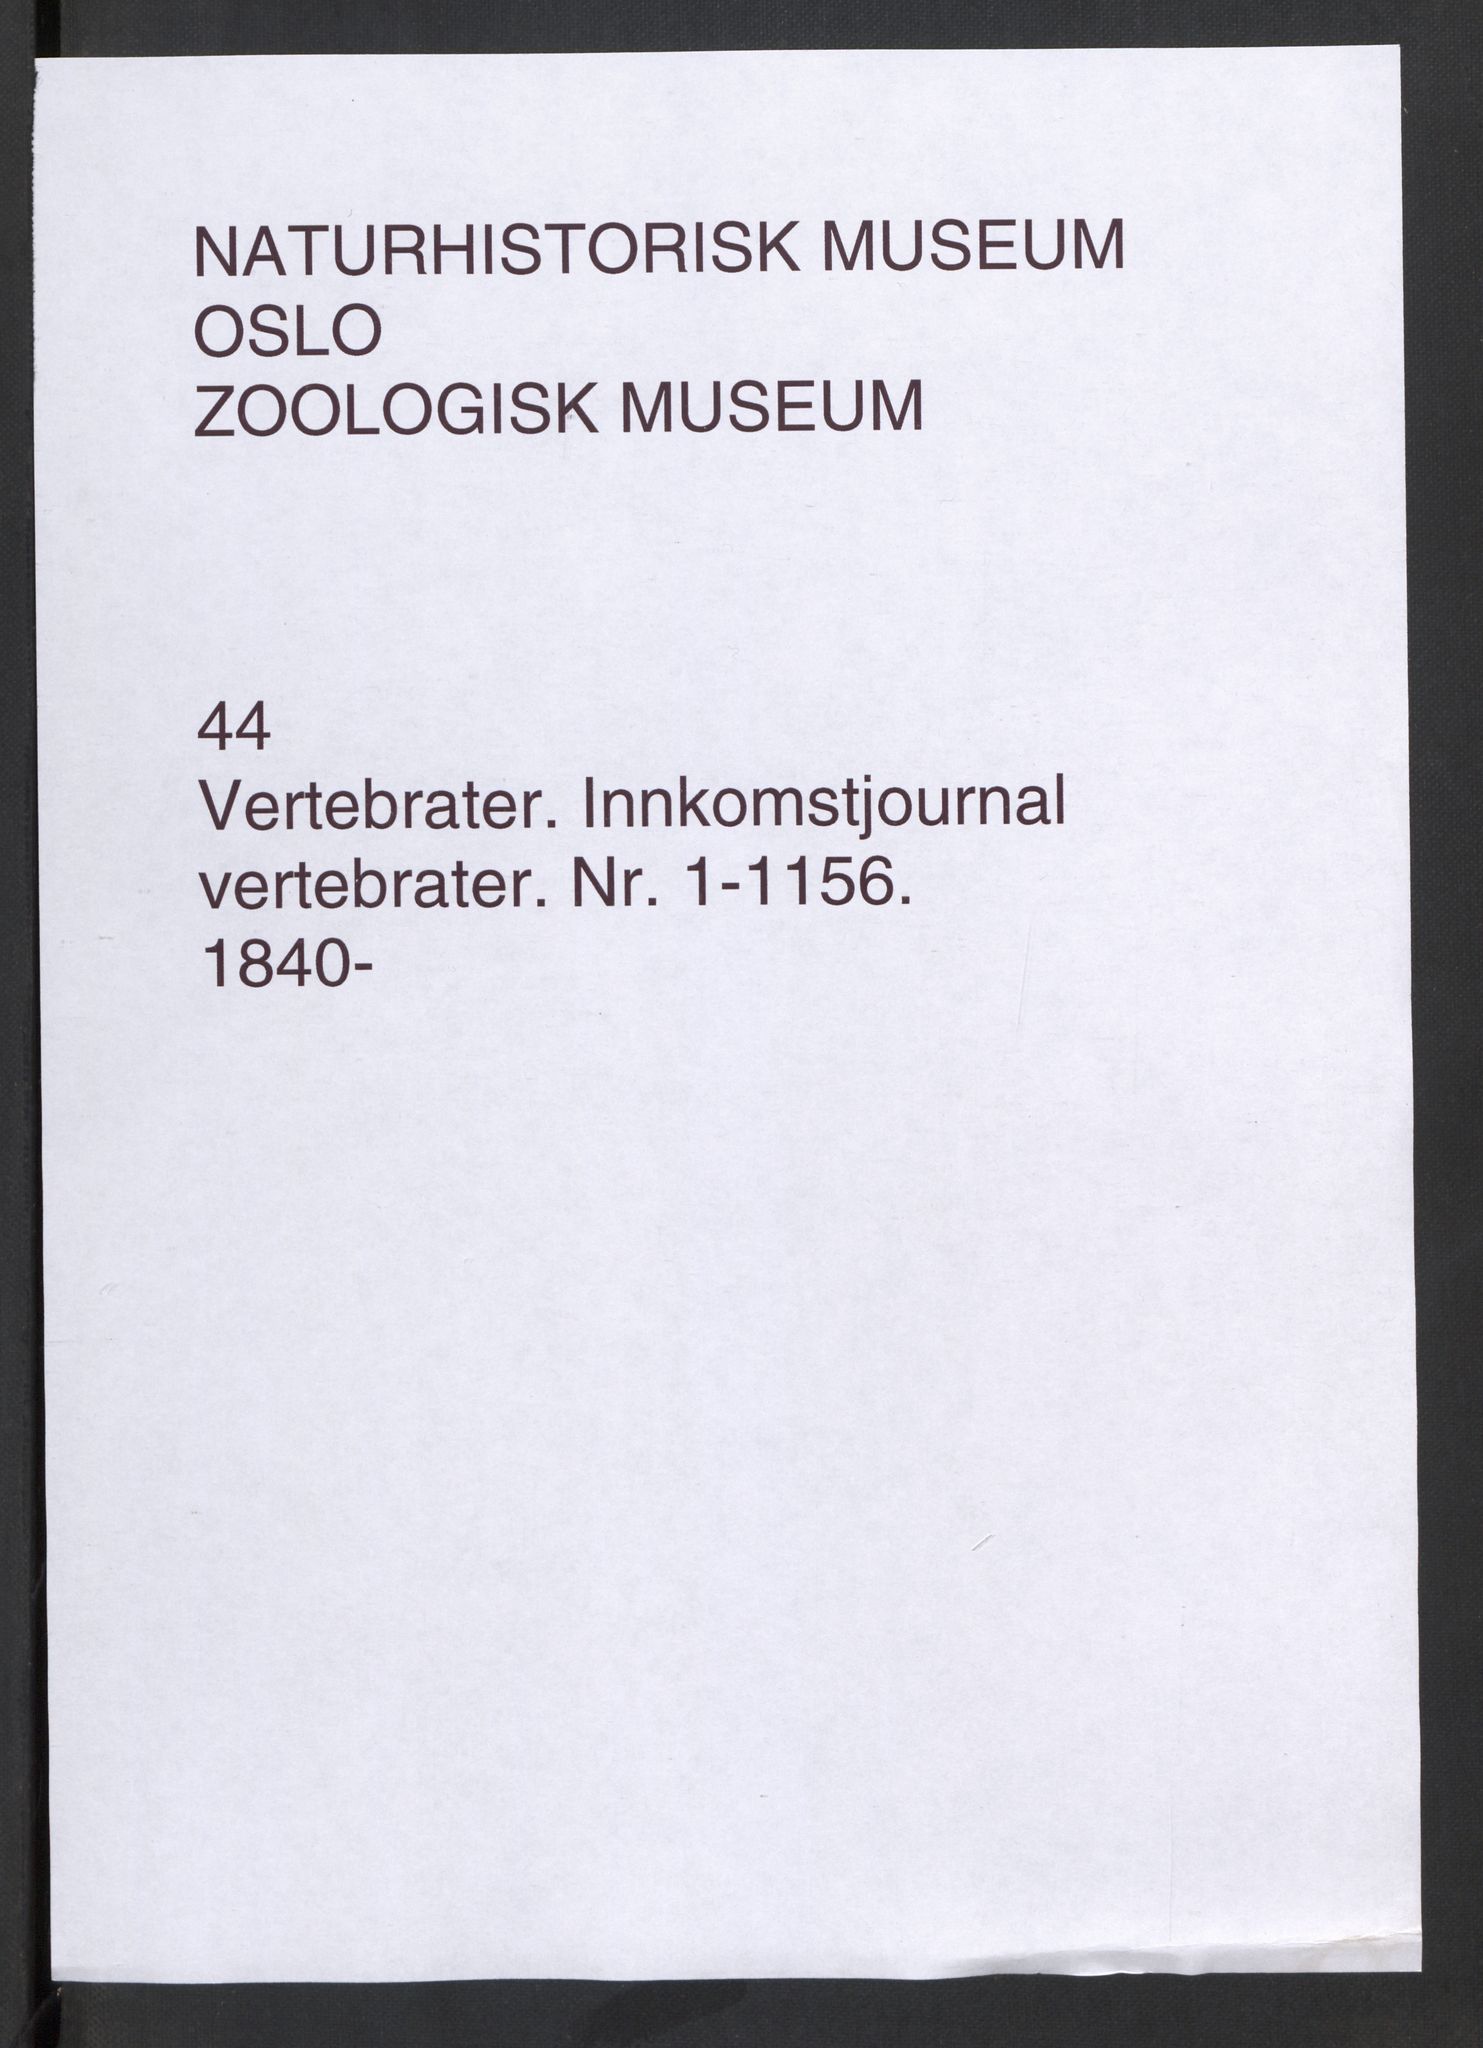 Naturhistorisk museum (Oslo), NHMO/-/5, 1840